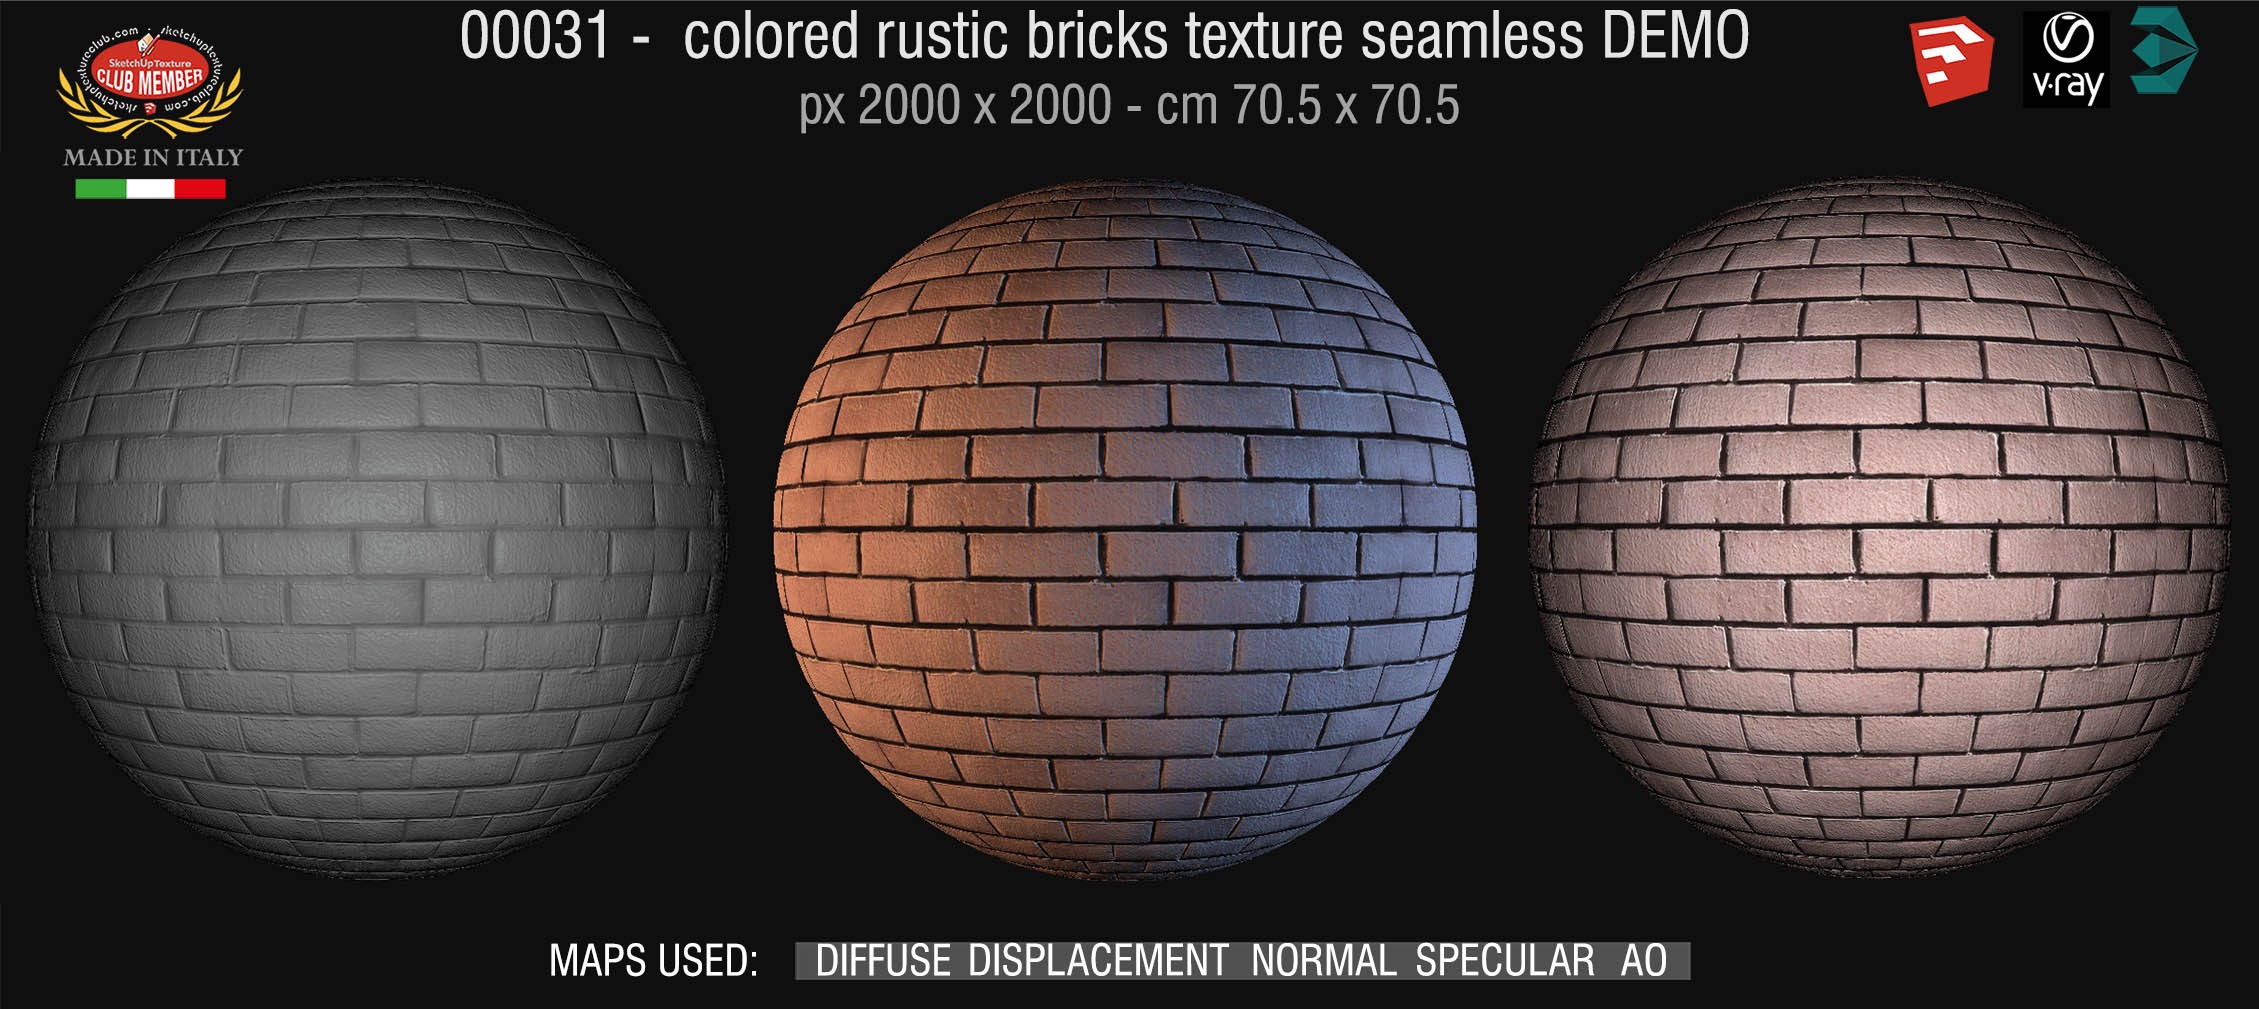 00031 colored rustic bricks texture seamless + maps DEMO